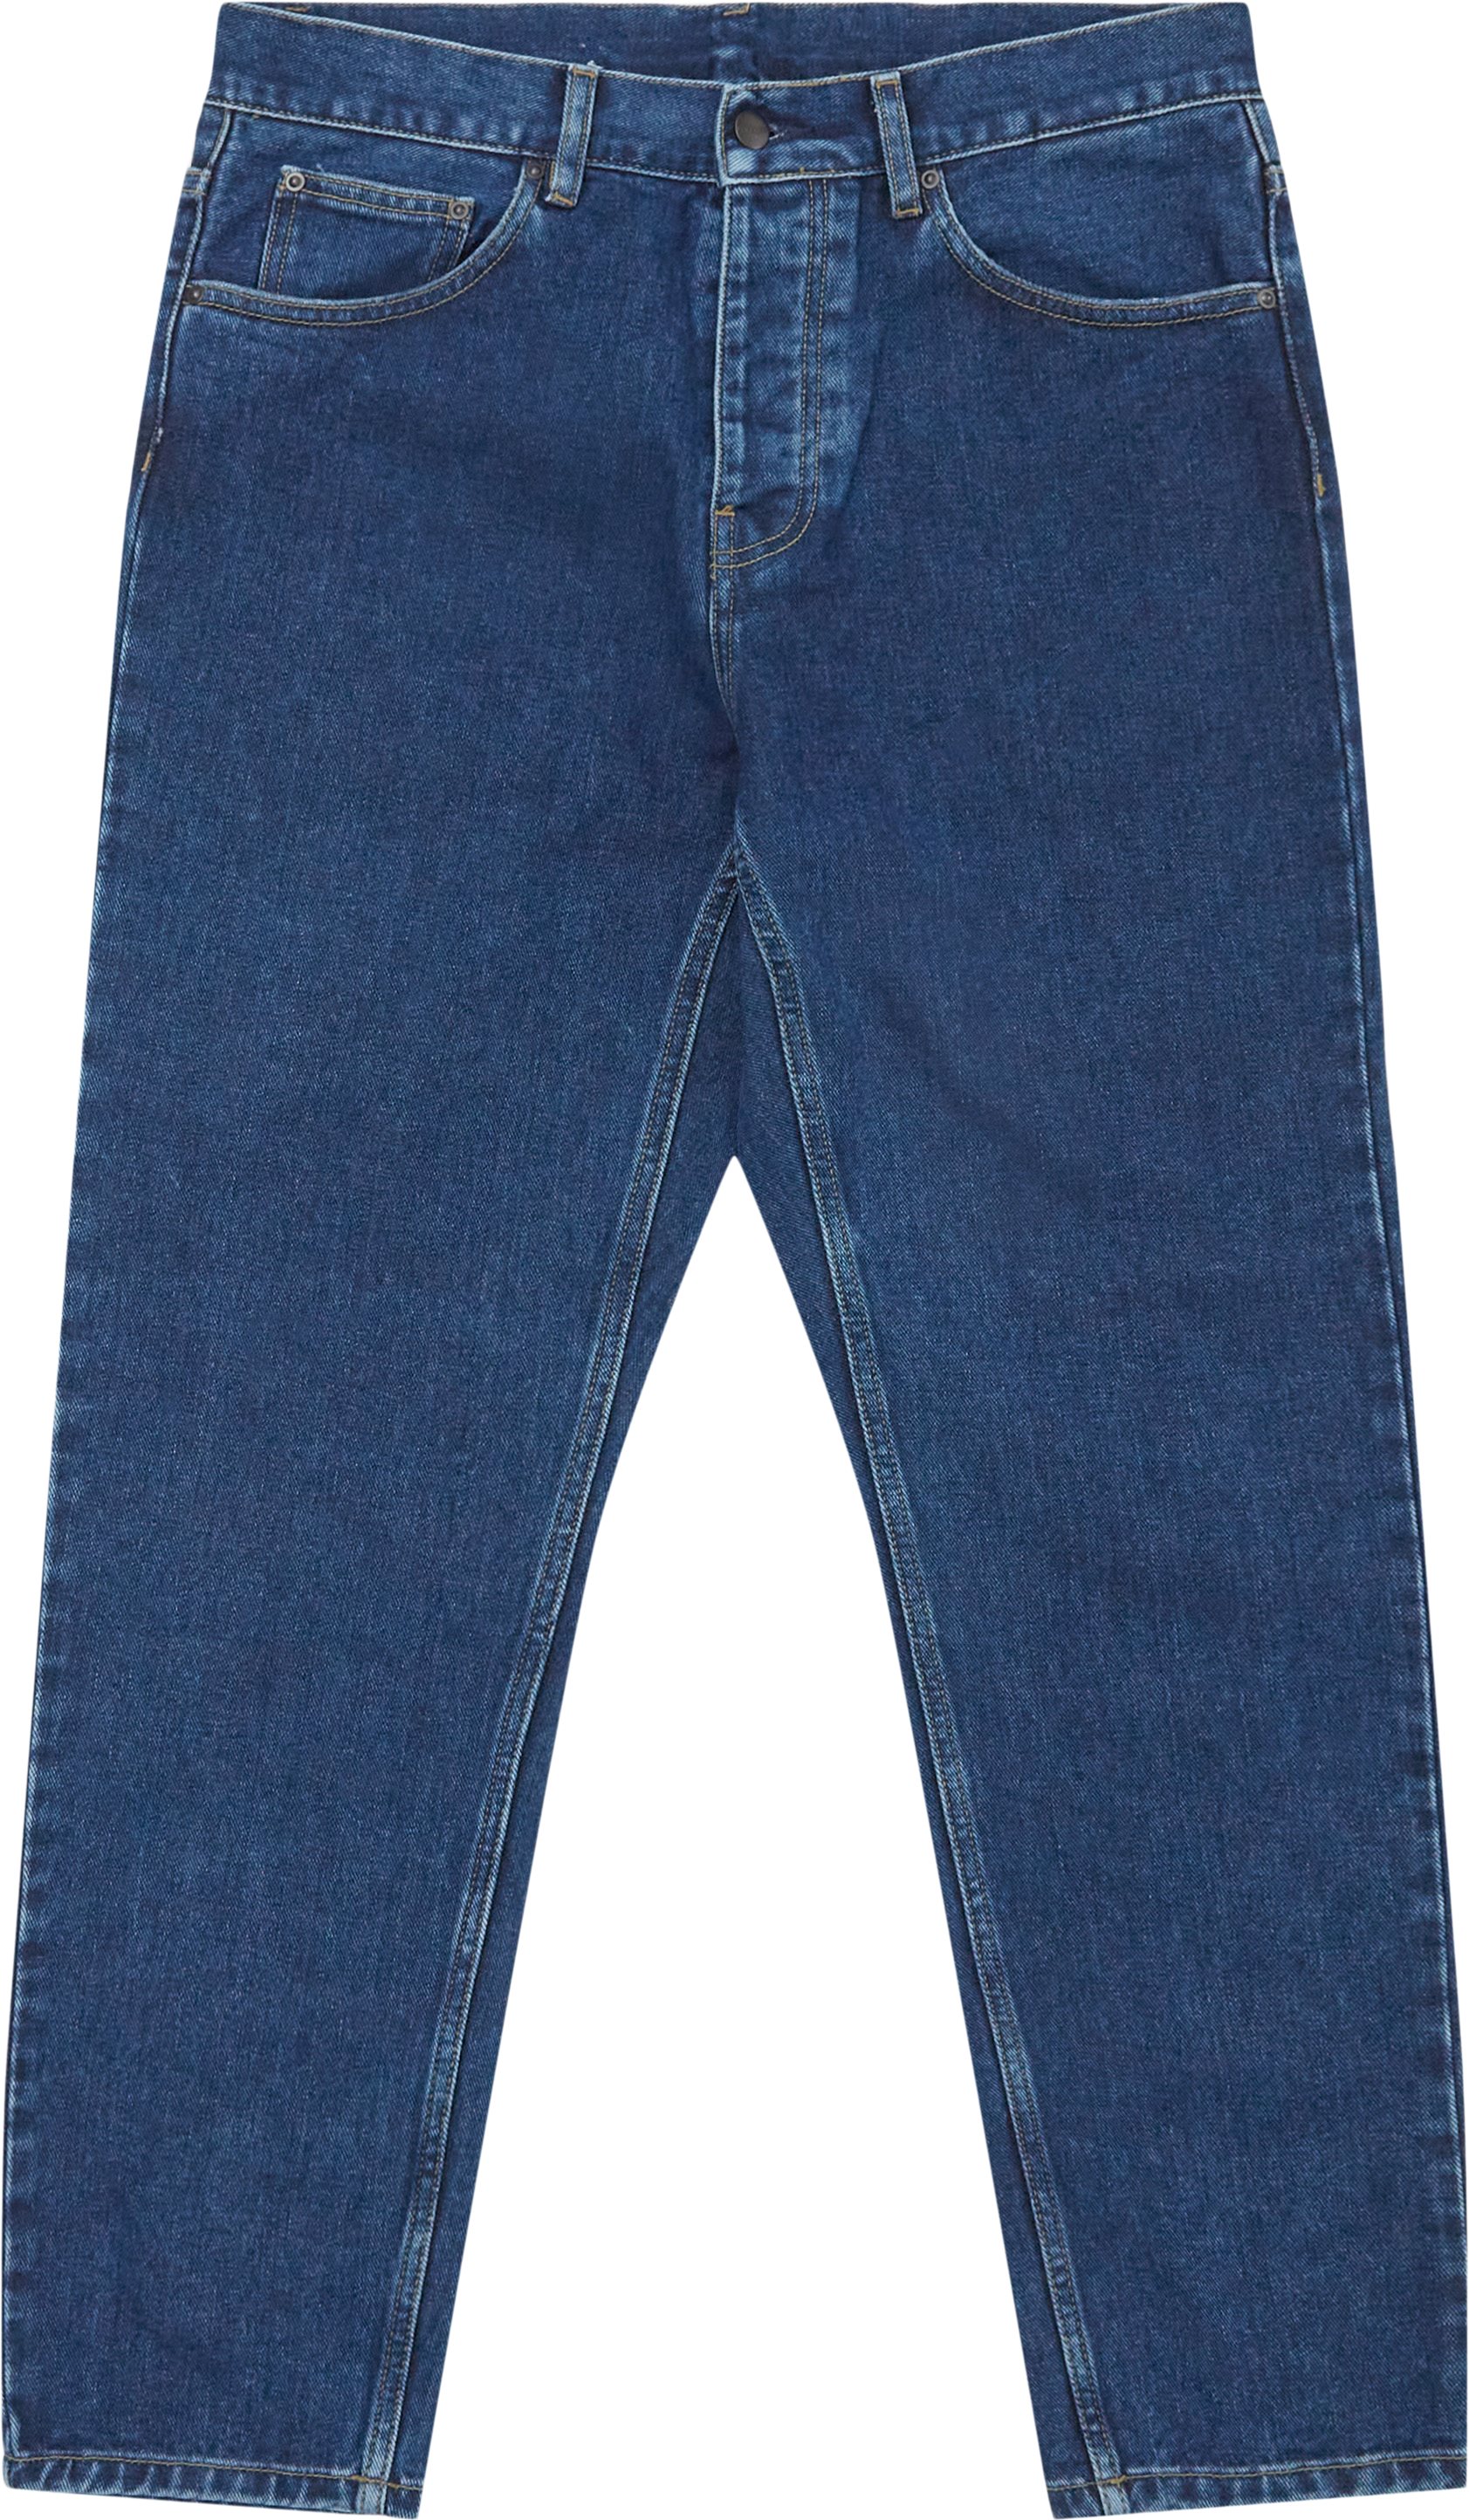 Carhartt WIP Jeans NEWEL I029208.01.06 Denim